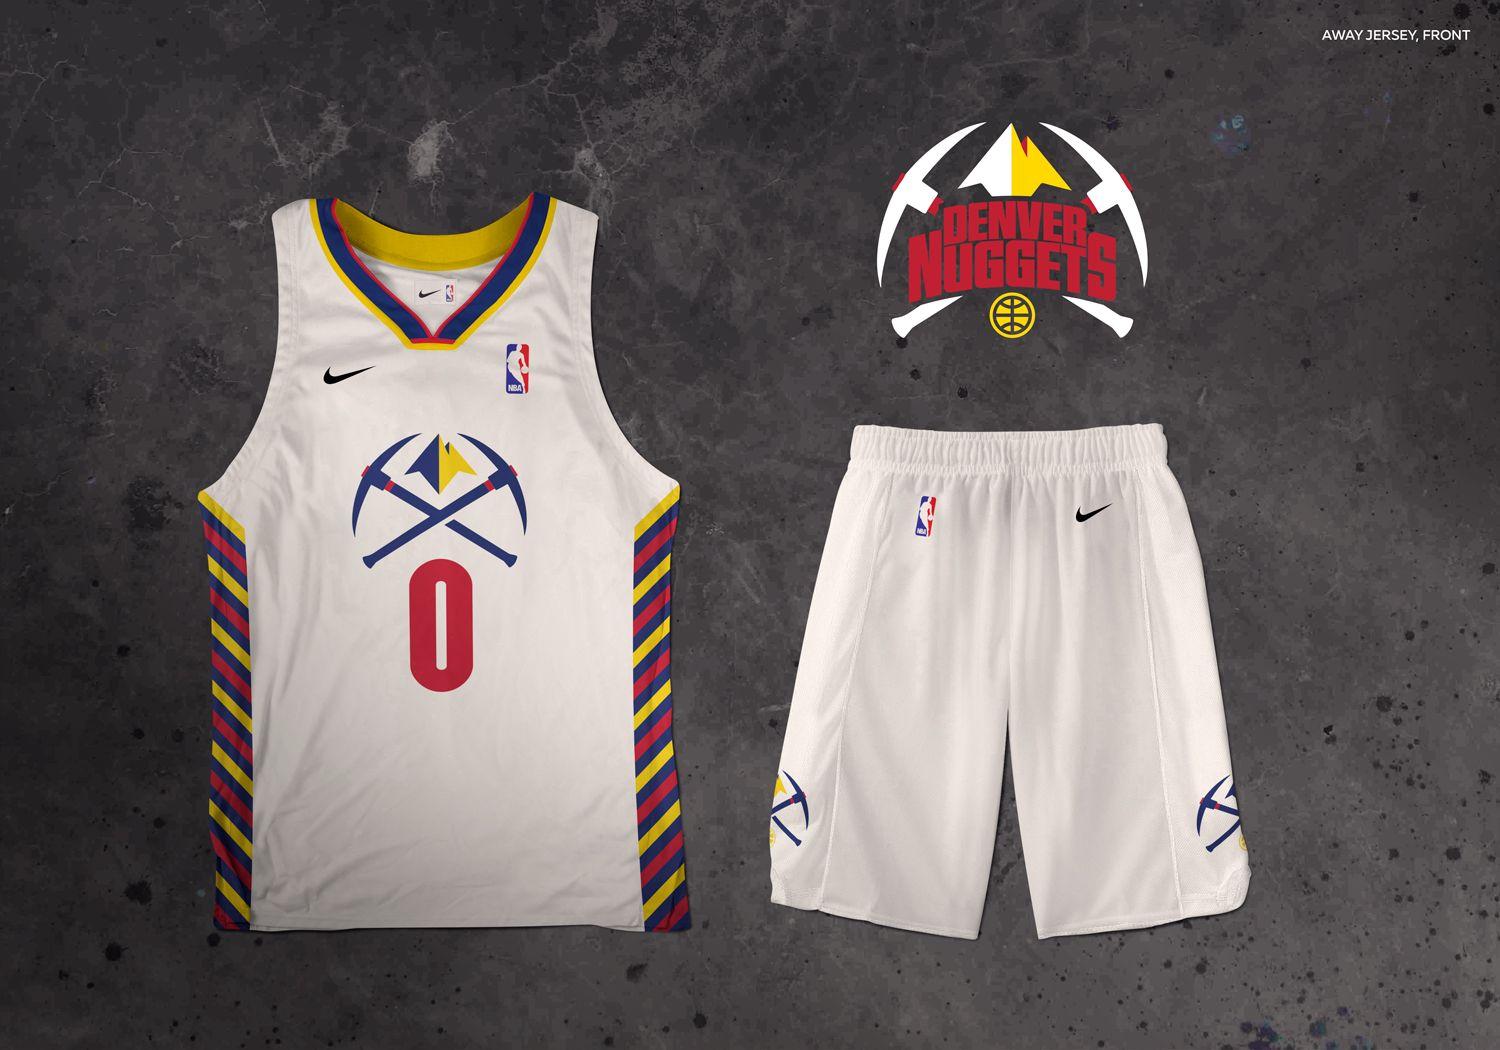 Denver Nuggets rebrand idea with uniform and logo mockups